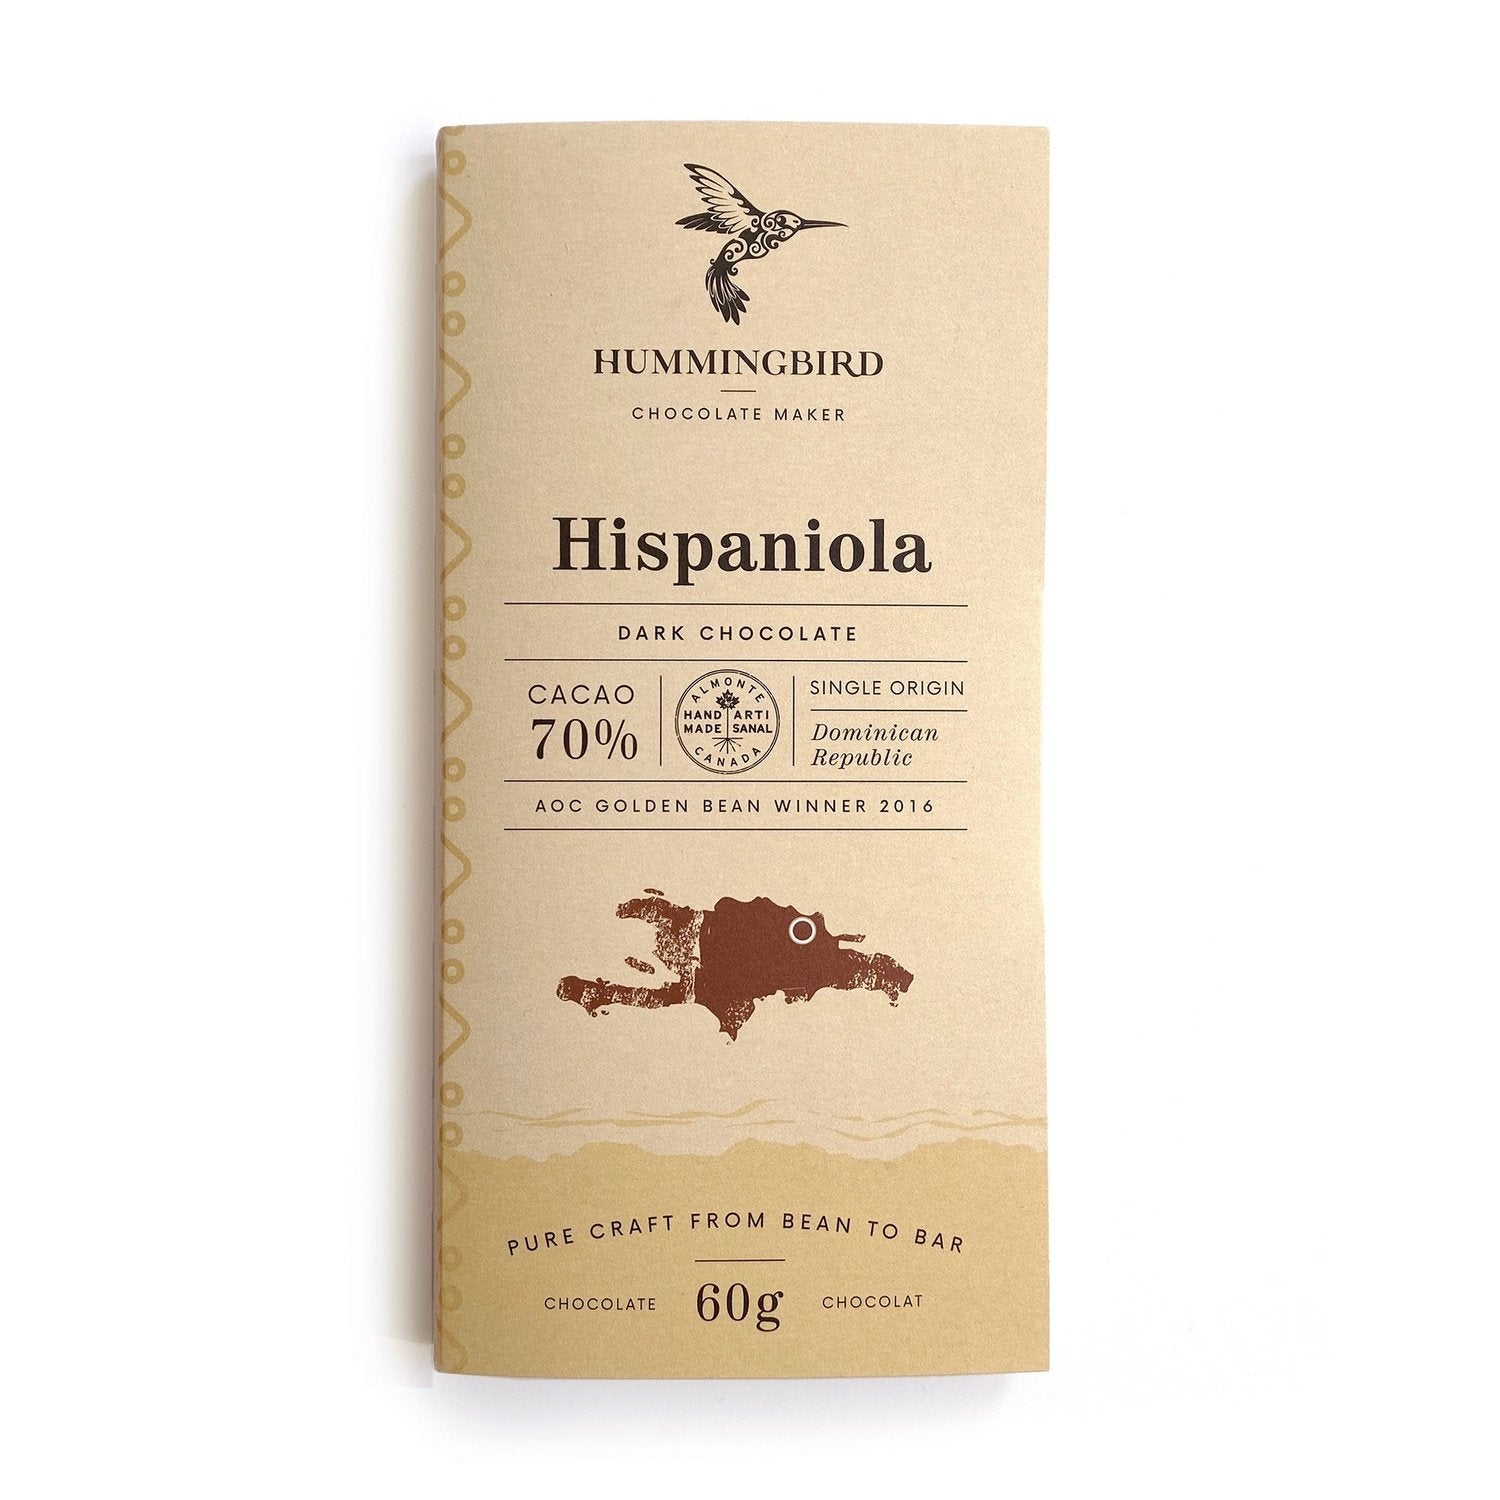 Hummingbird Chocolate Maker Hispaniola chocolate bar